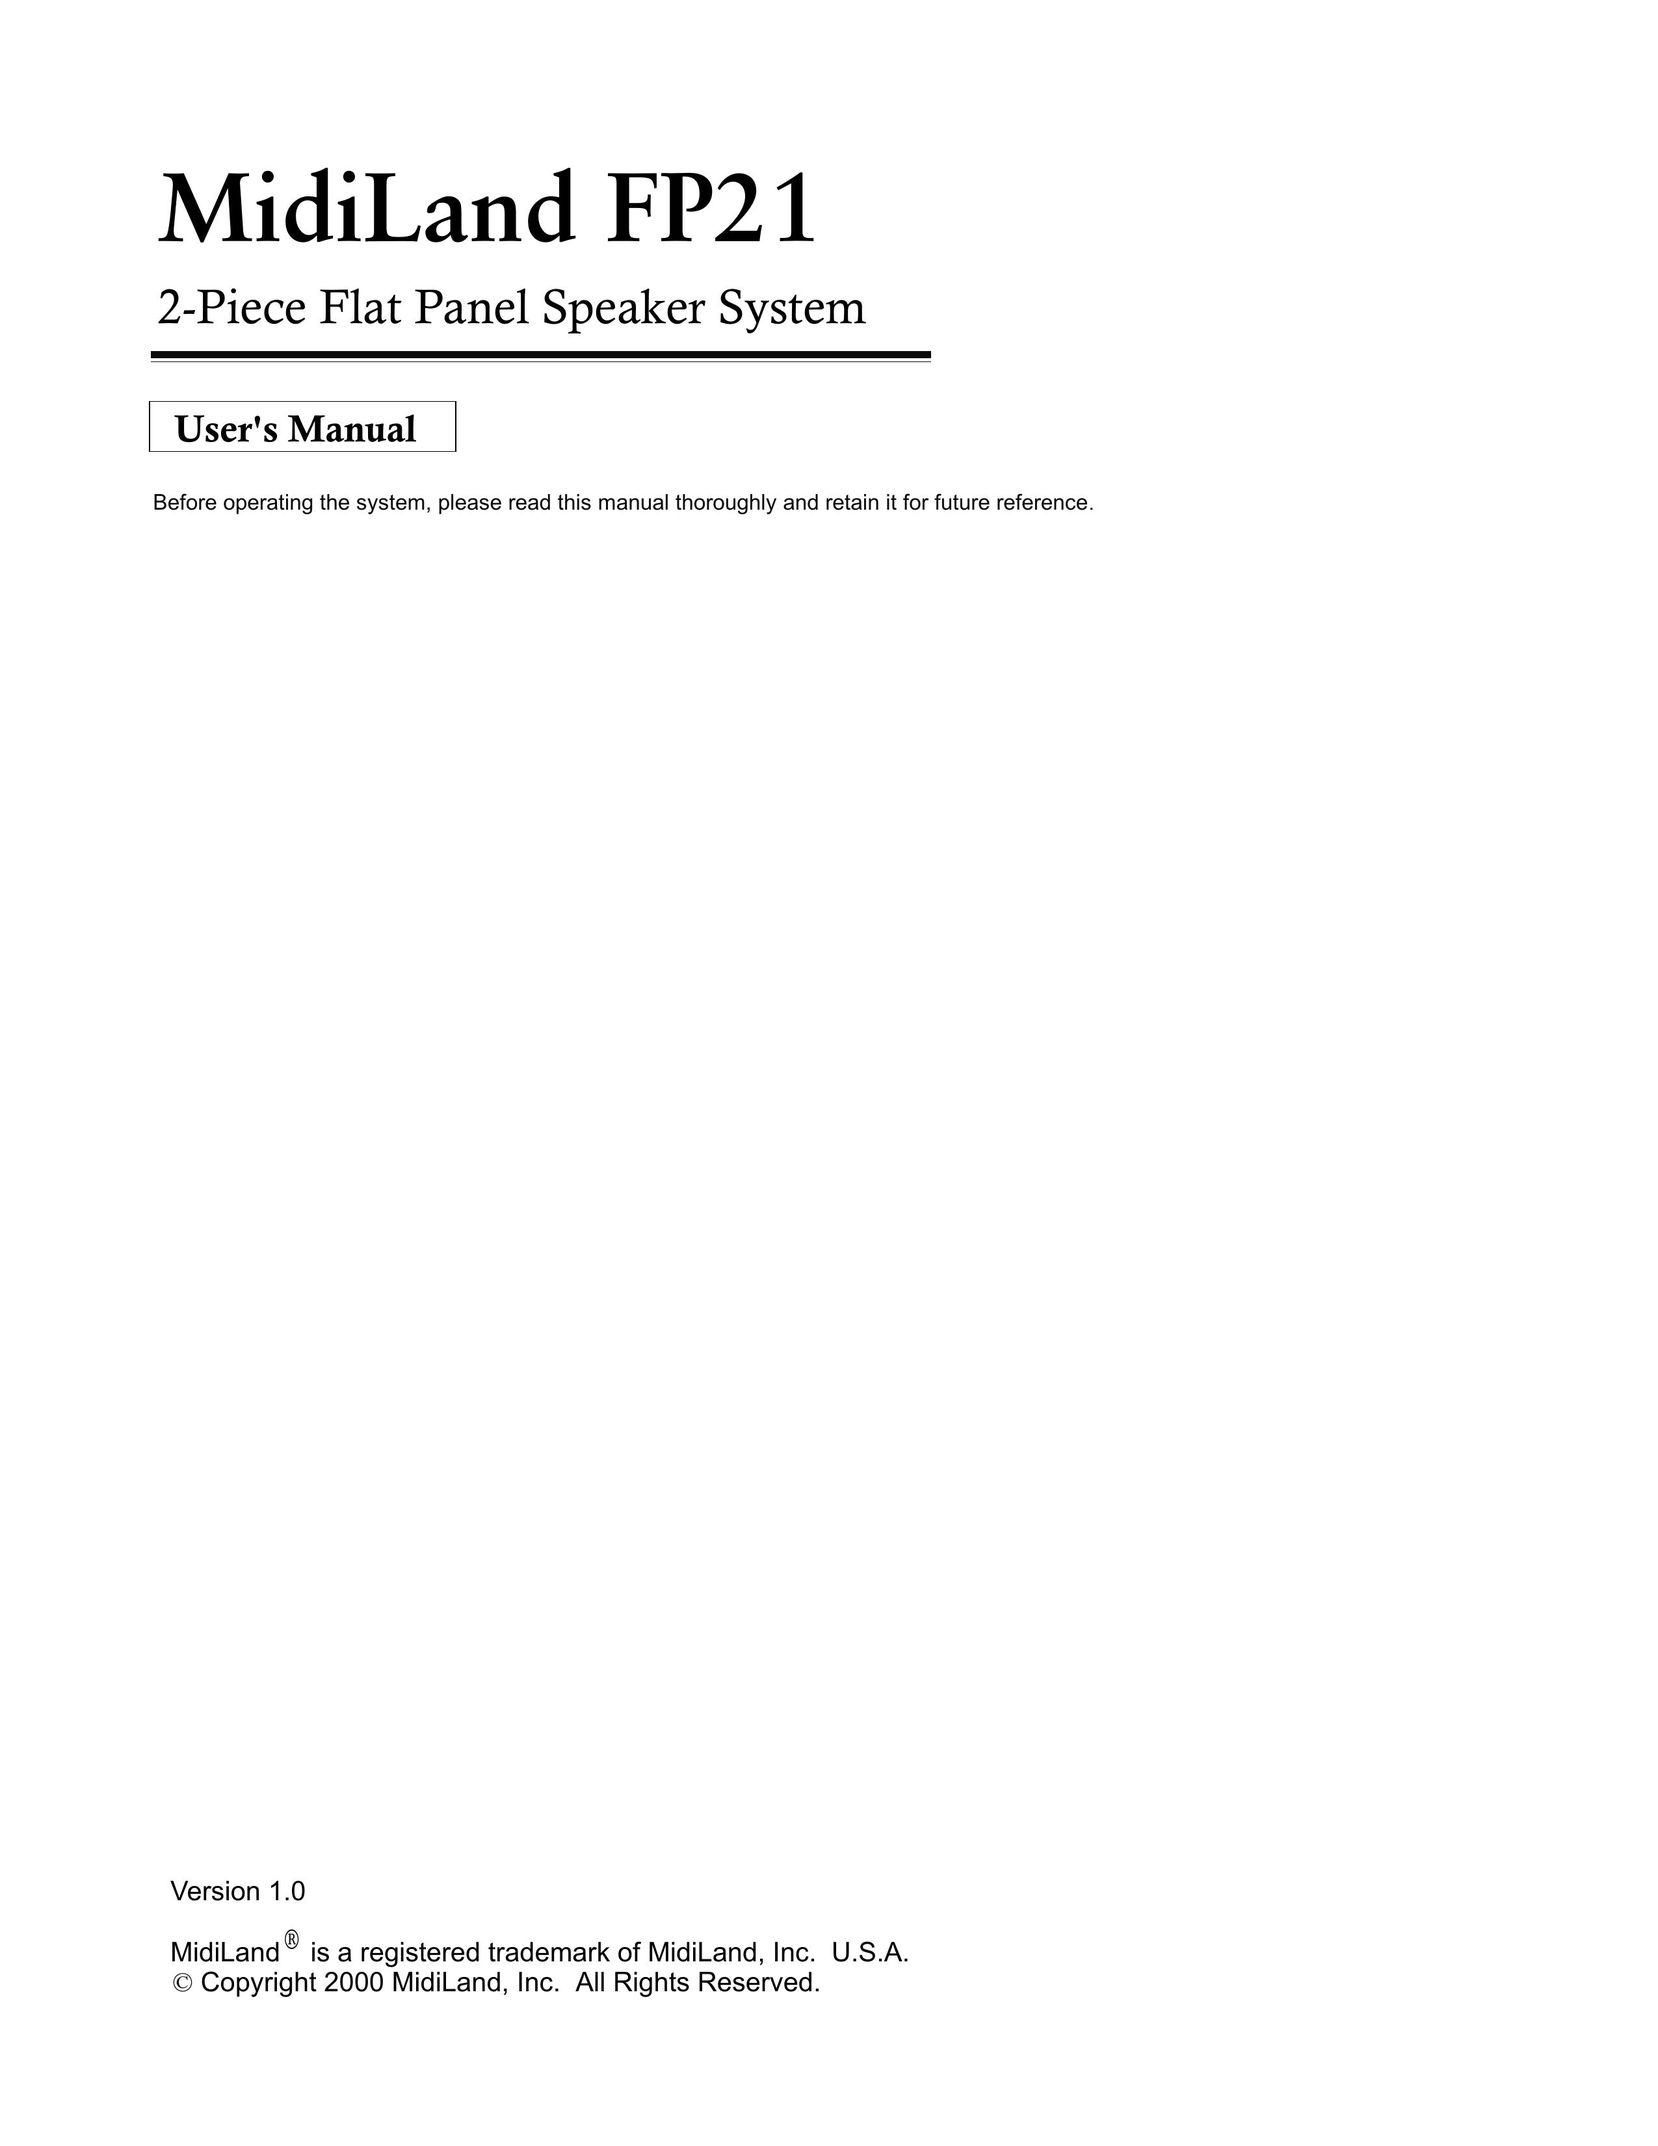 MidiLand FP21 Portable Speaker User Manual